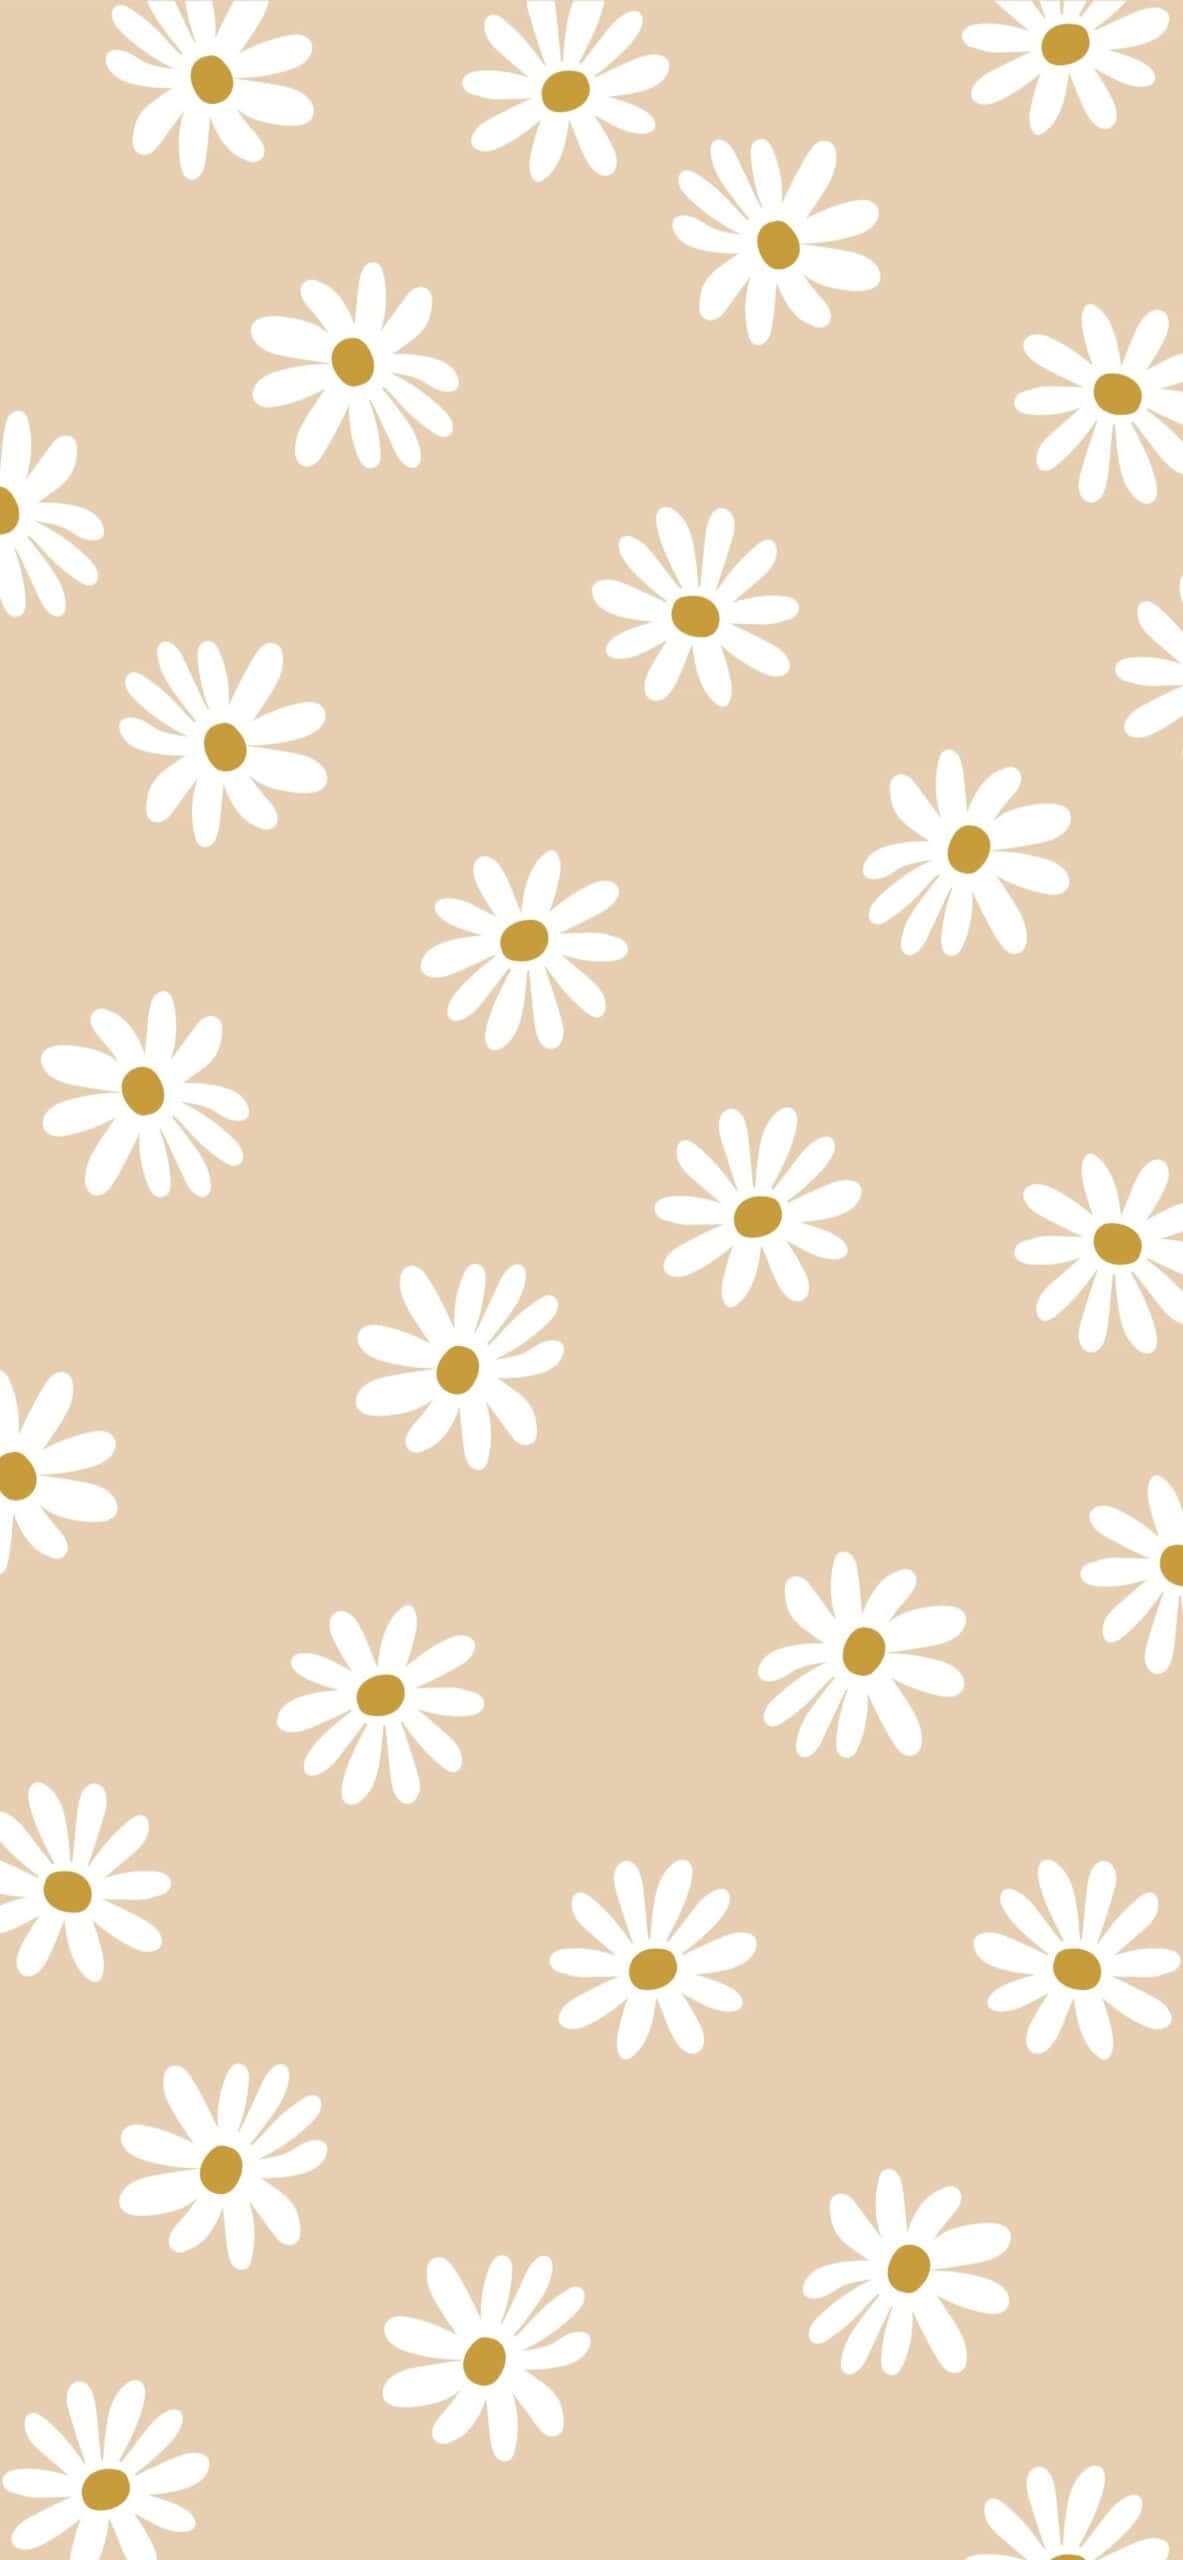 Daisy Pattern On A Beige Background